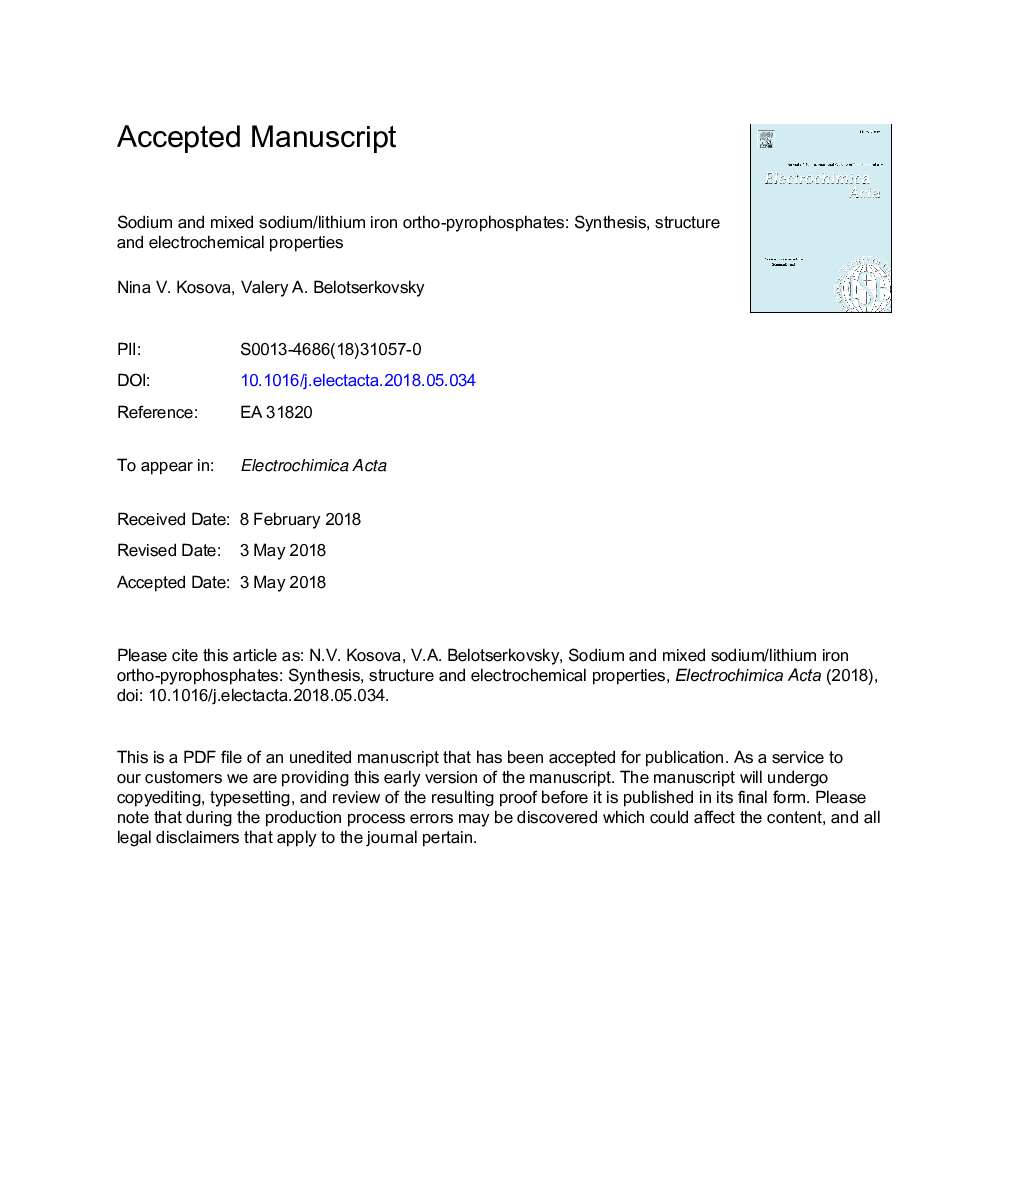 سنتز و ترکیبات سدیم / لیتیوم اورتو پیرو فسفات: سنتز، ساختار و خواص الکتروشیمیایی 